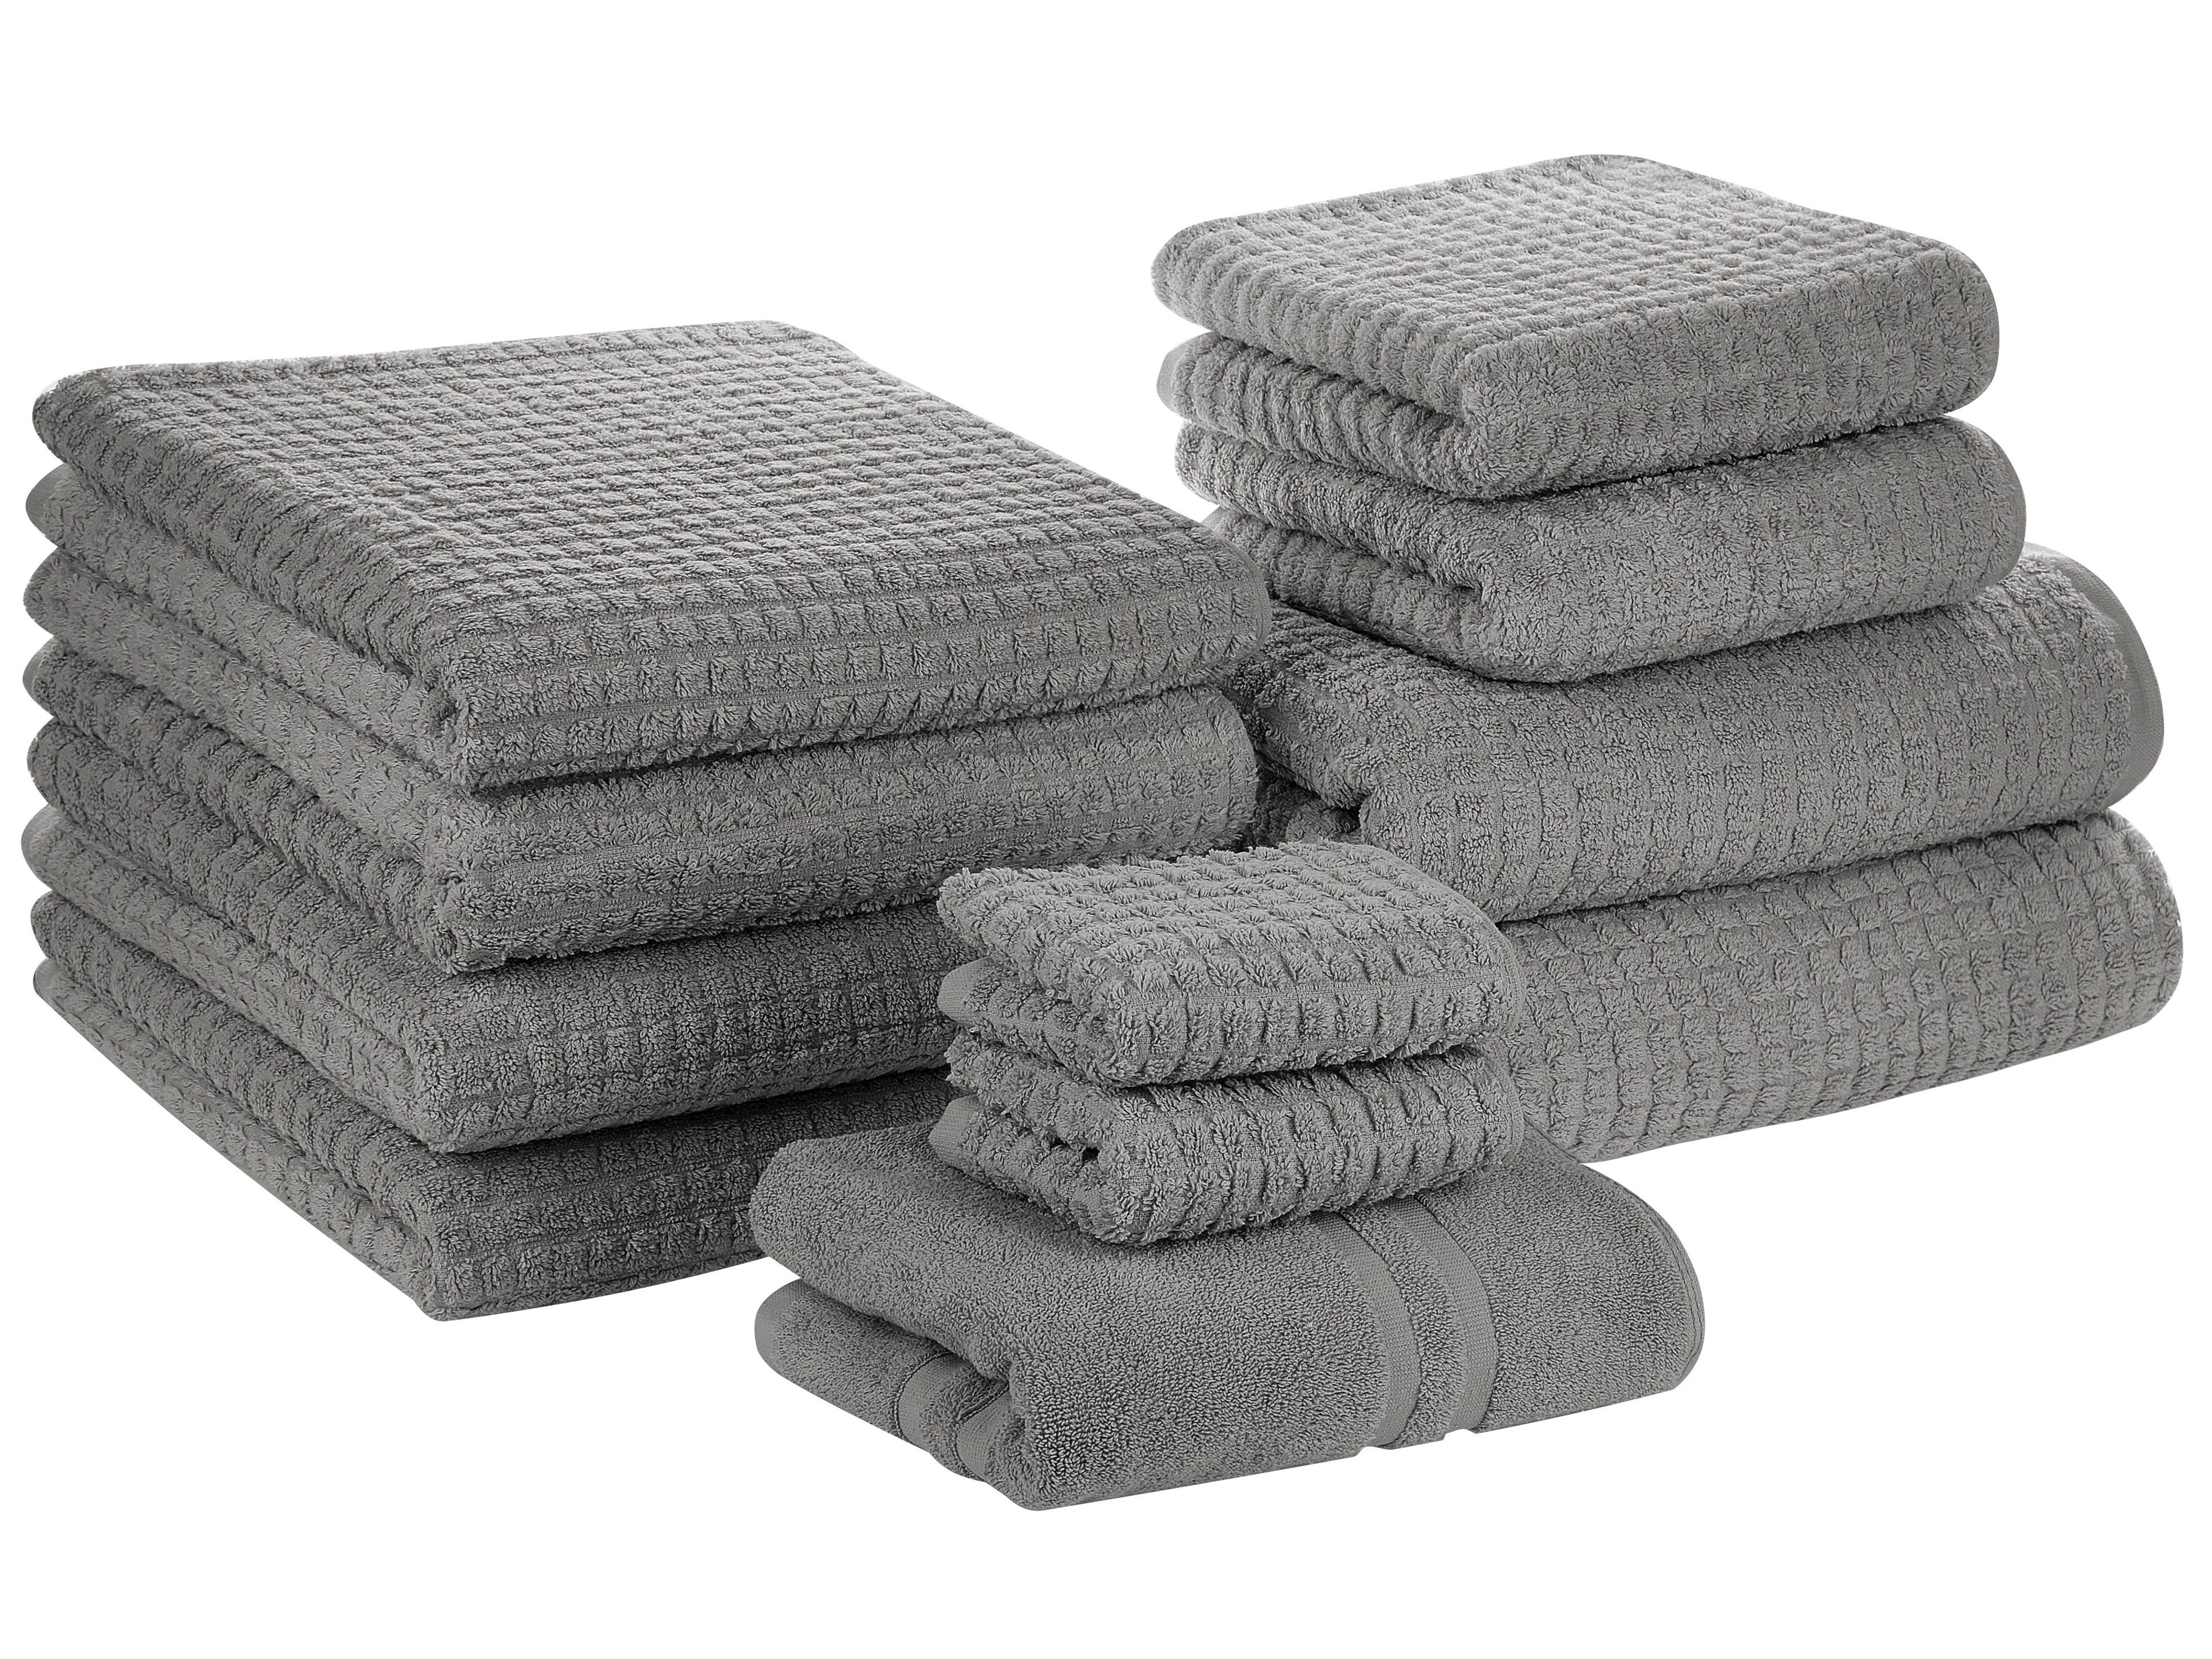 Conjunto de 11 toallas de algodón gris ATAI